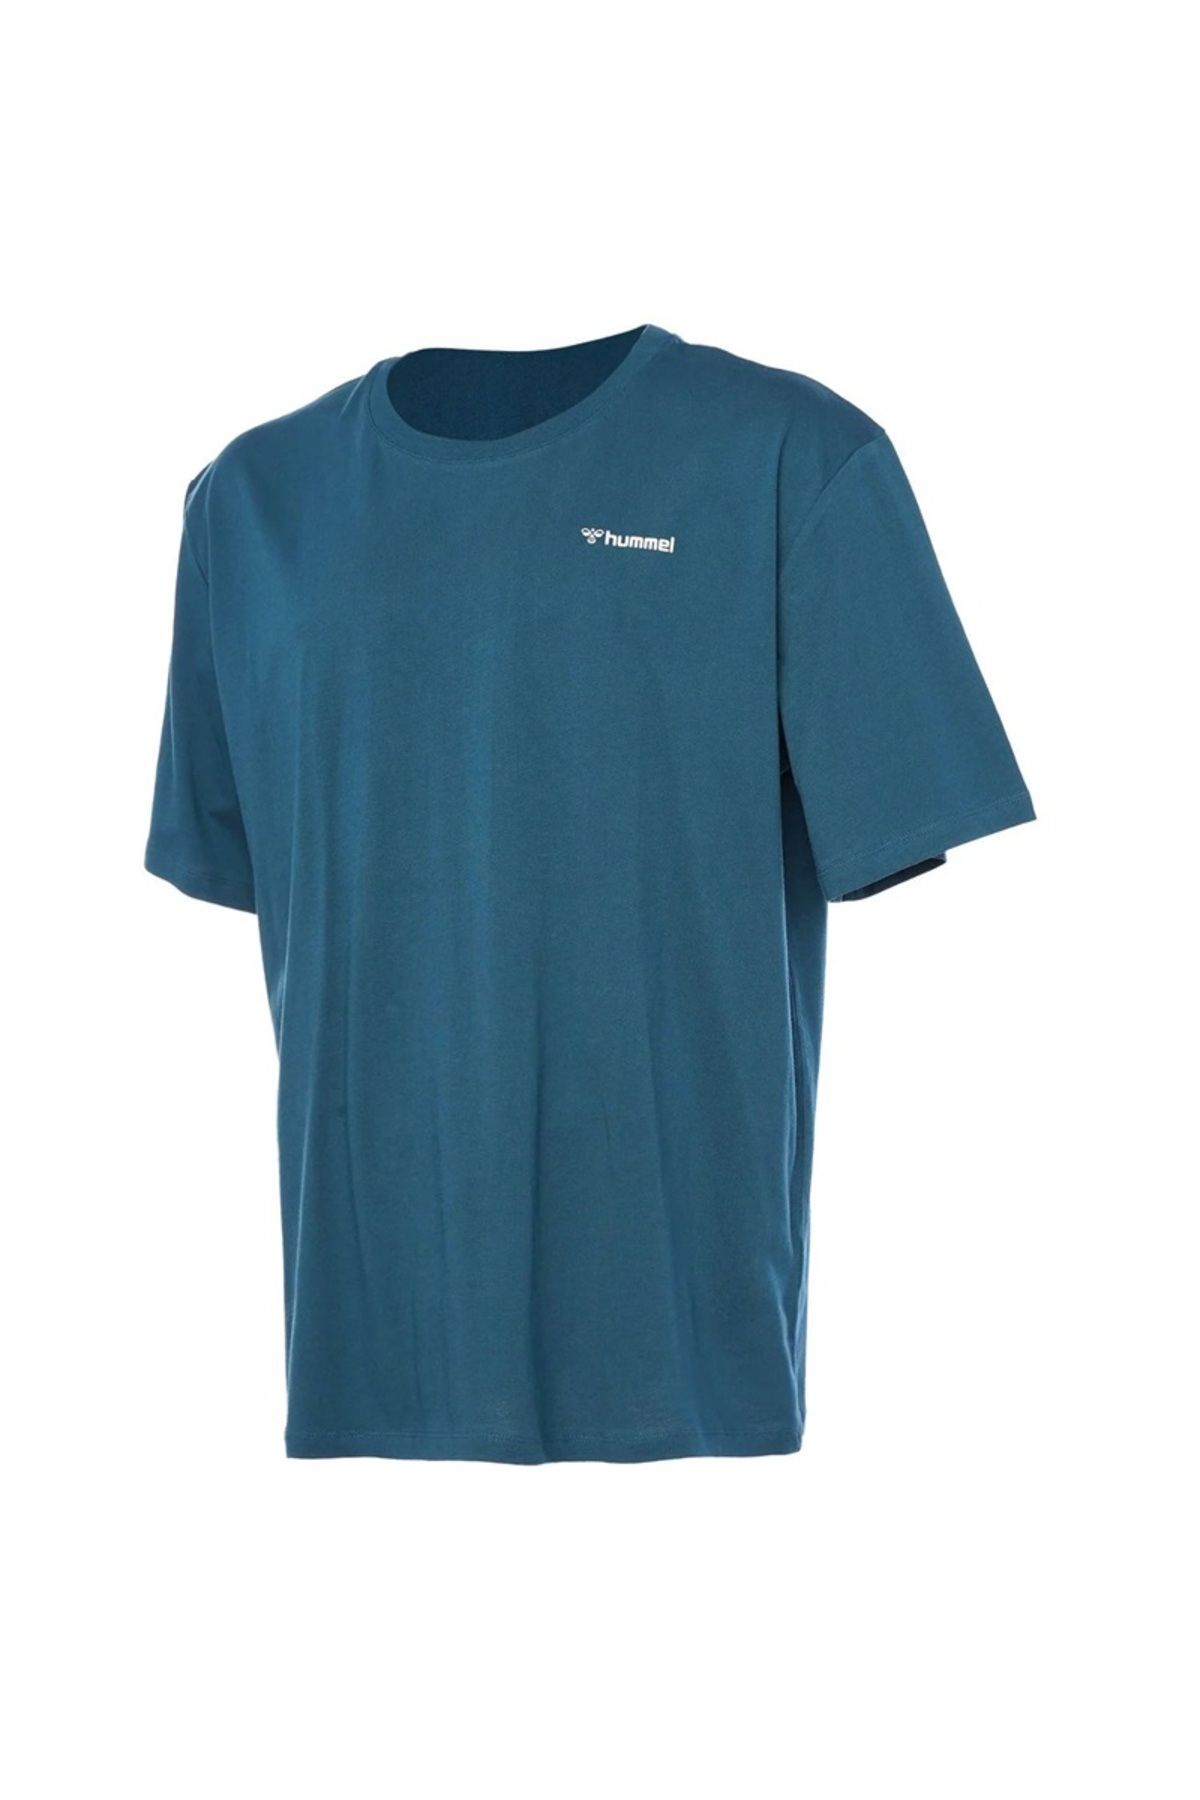 hummel Hmlandre Oversıze T-shırt S/s Erkek T-shirt 911880-7511 Legıon Blue